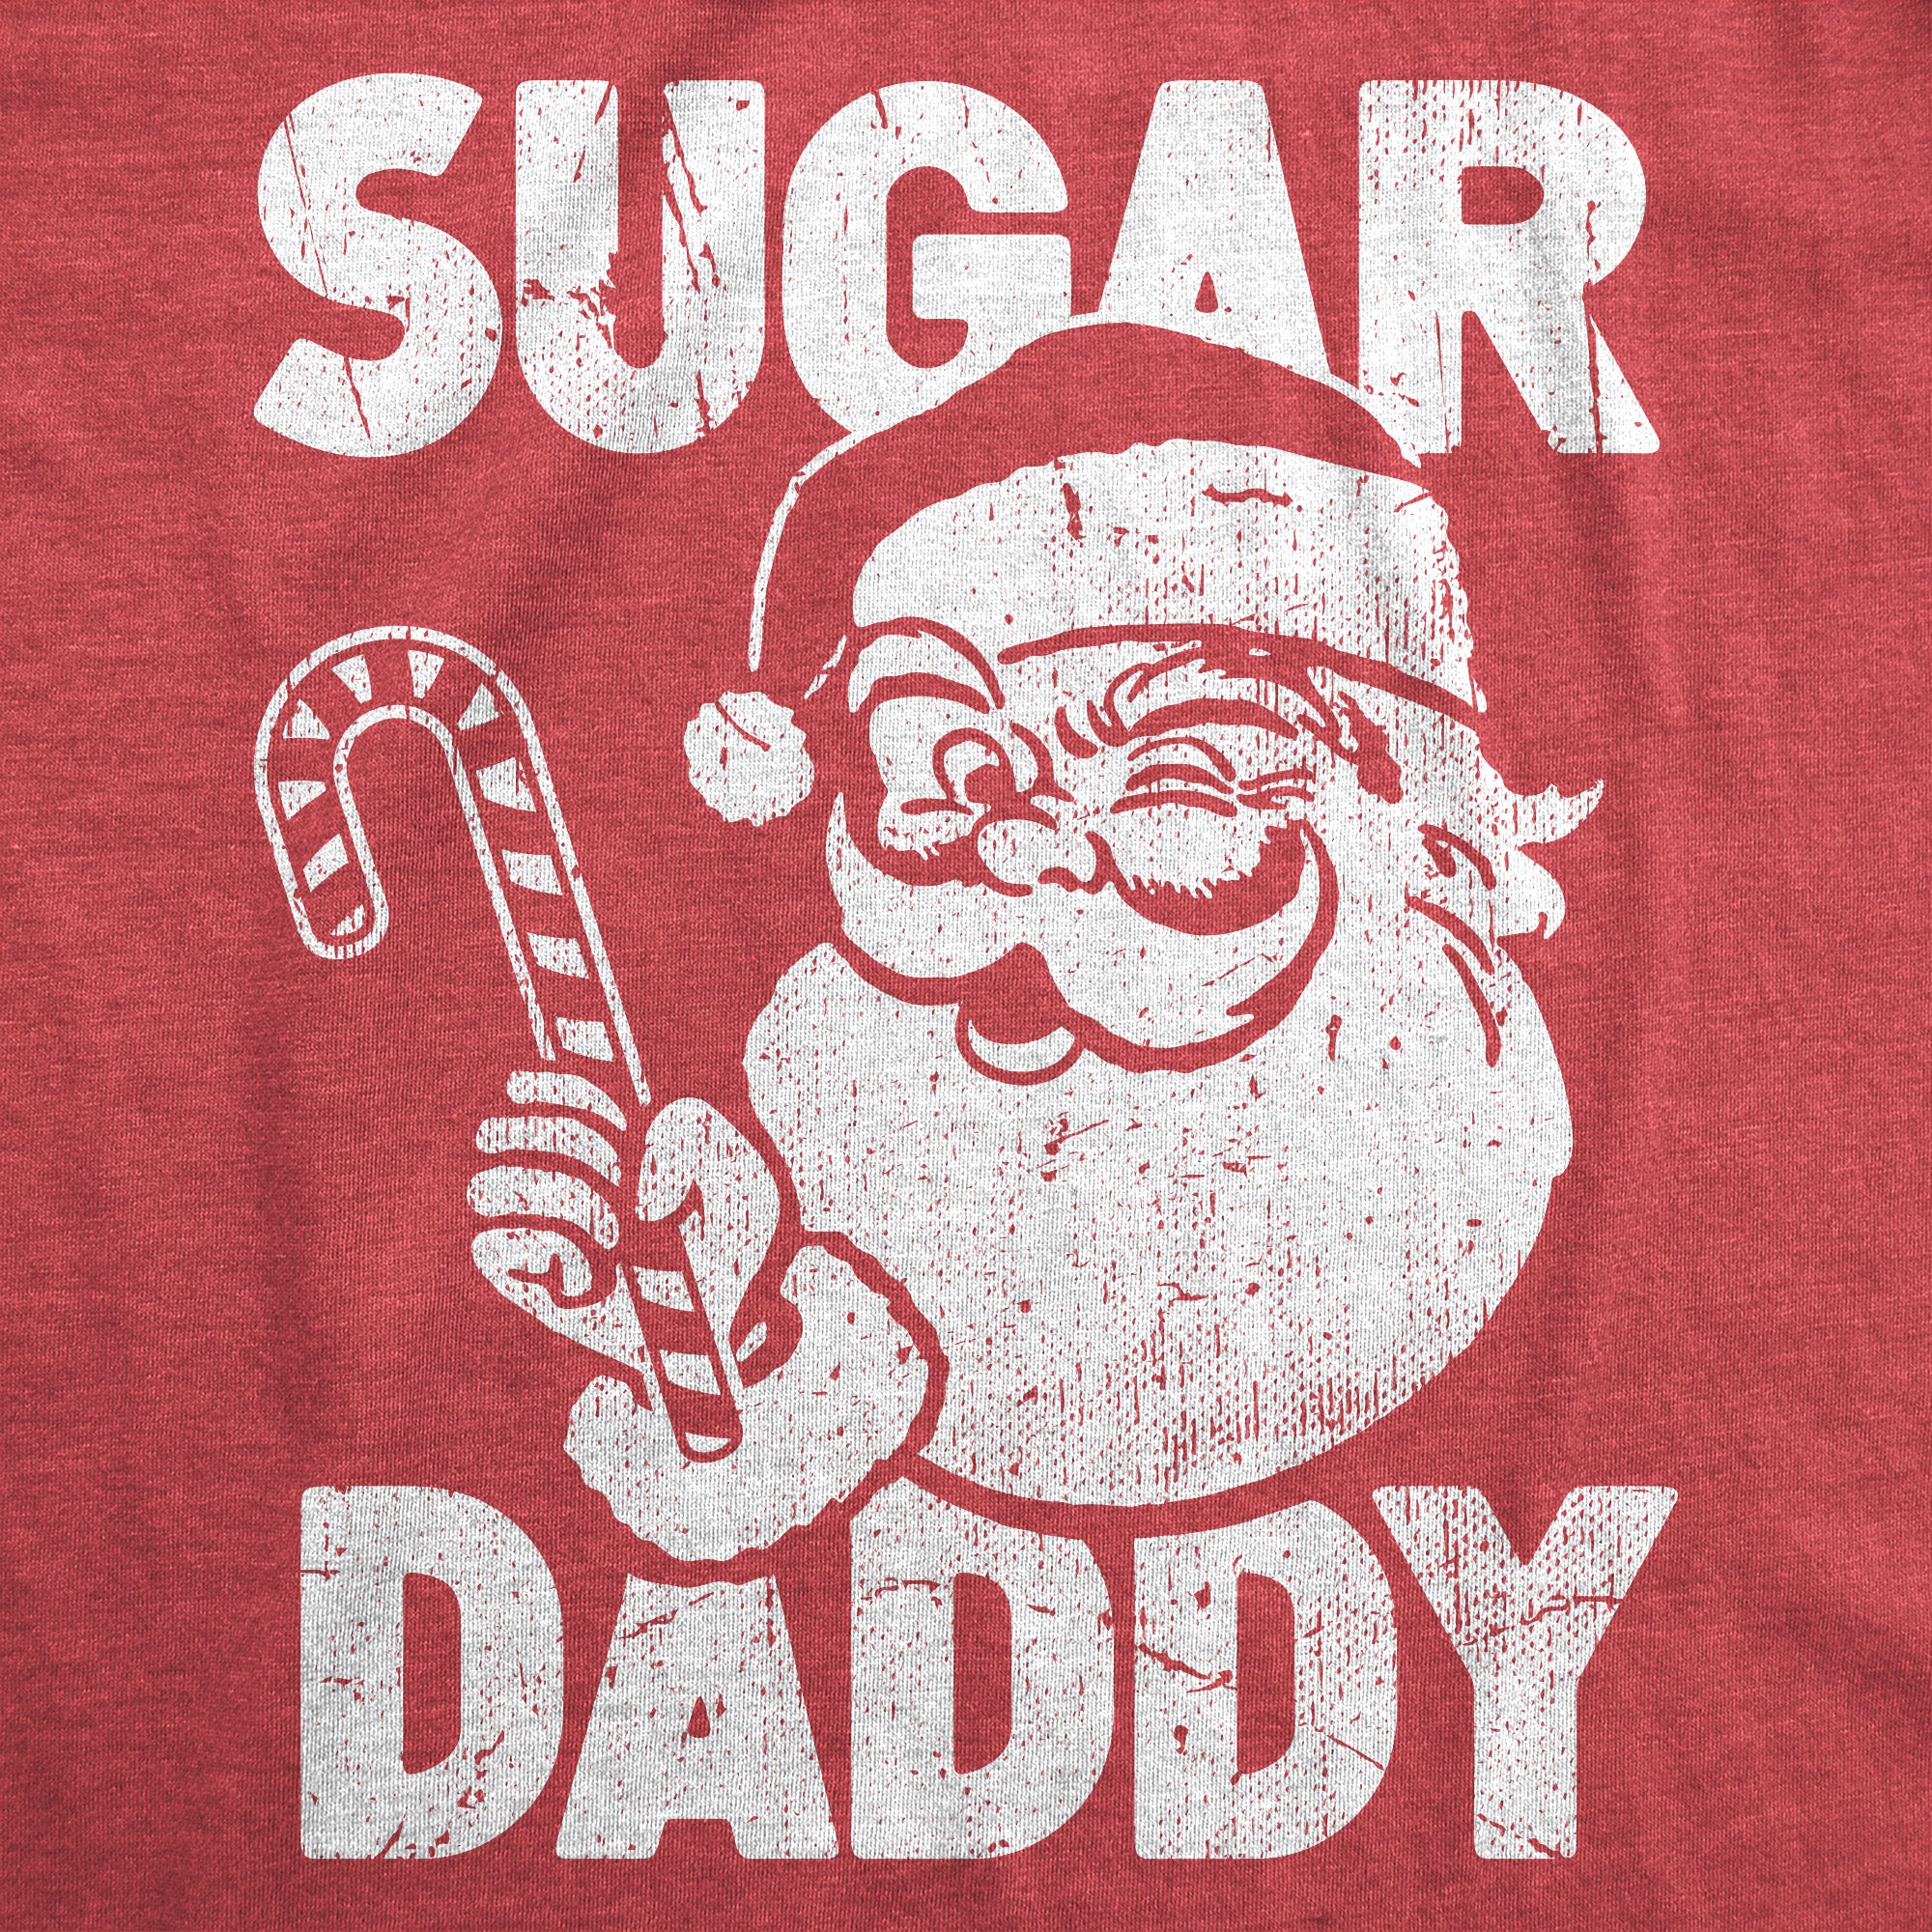 Funny Heather Red - SUGAR Sugar Daddy Mens T Shirt Nerdy Christmas Sarcastic Tee